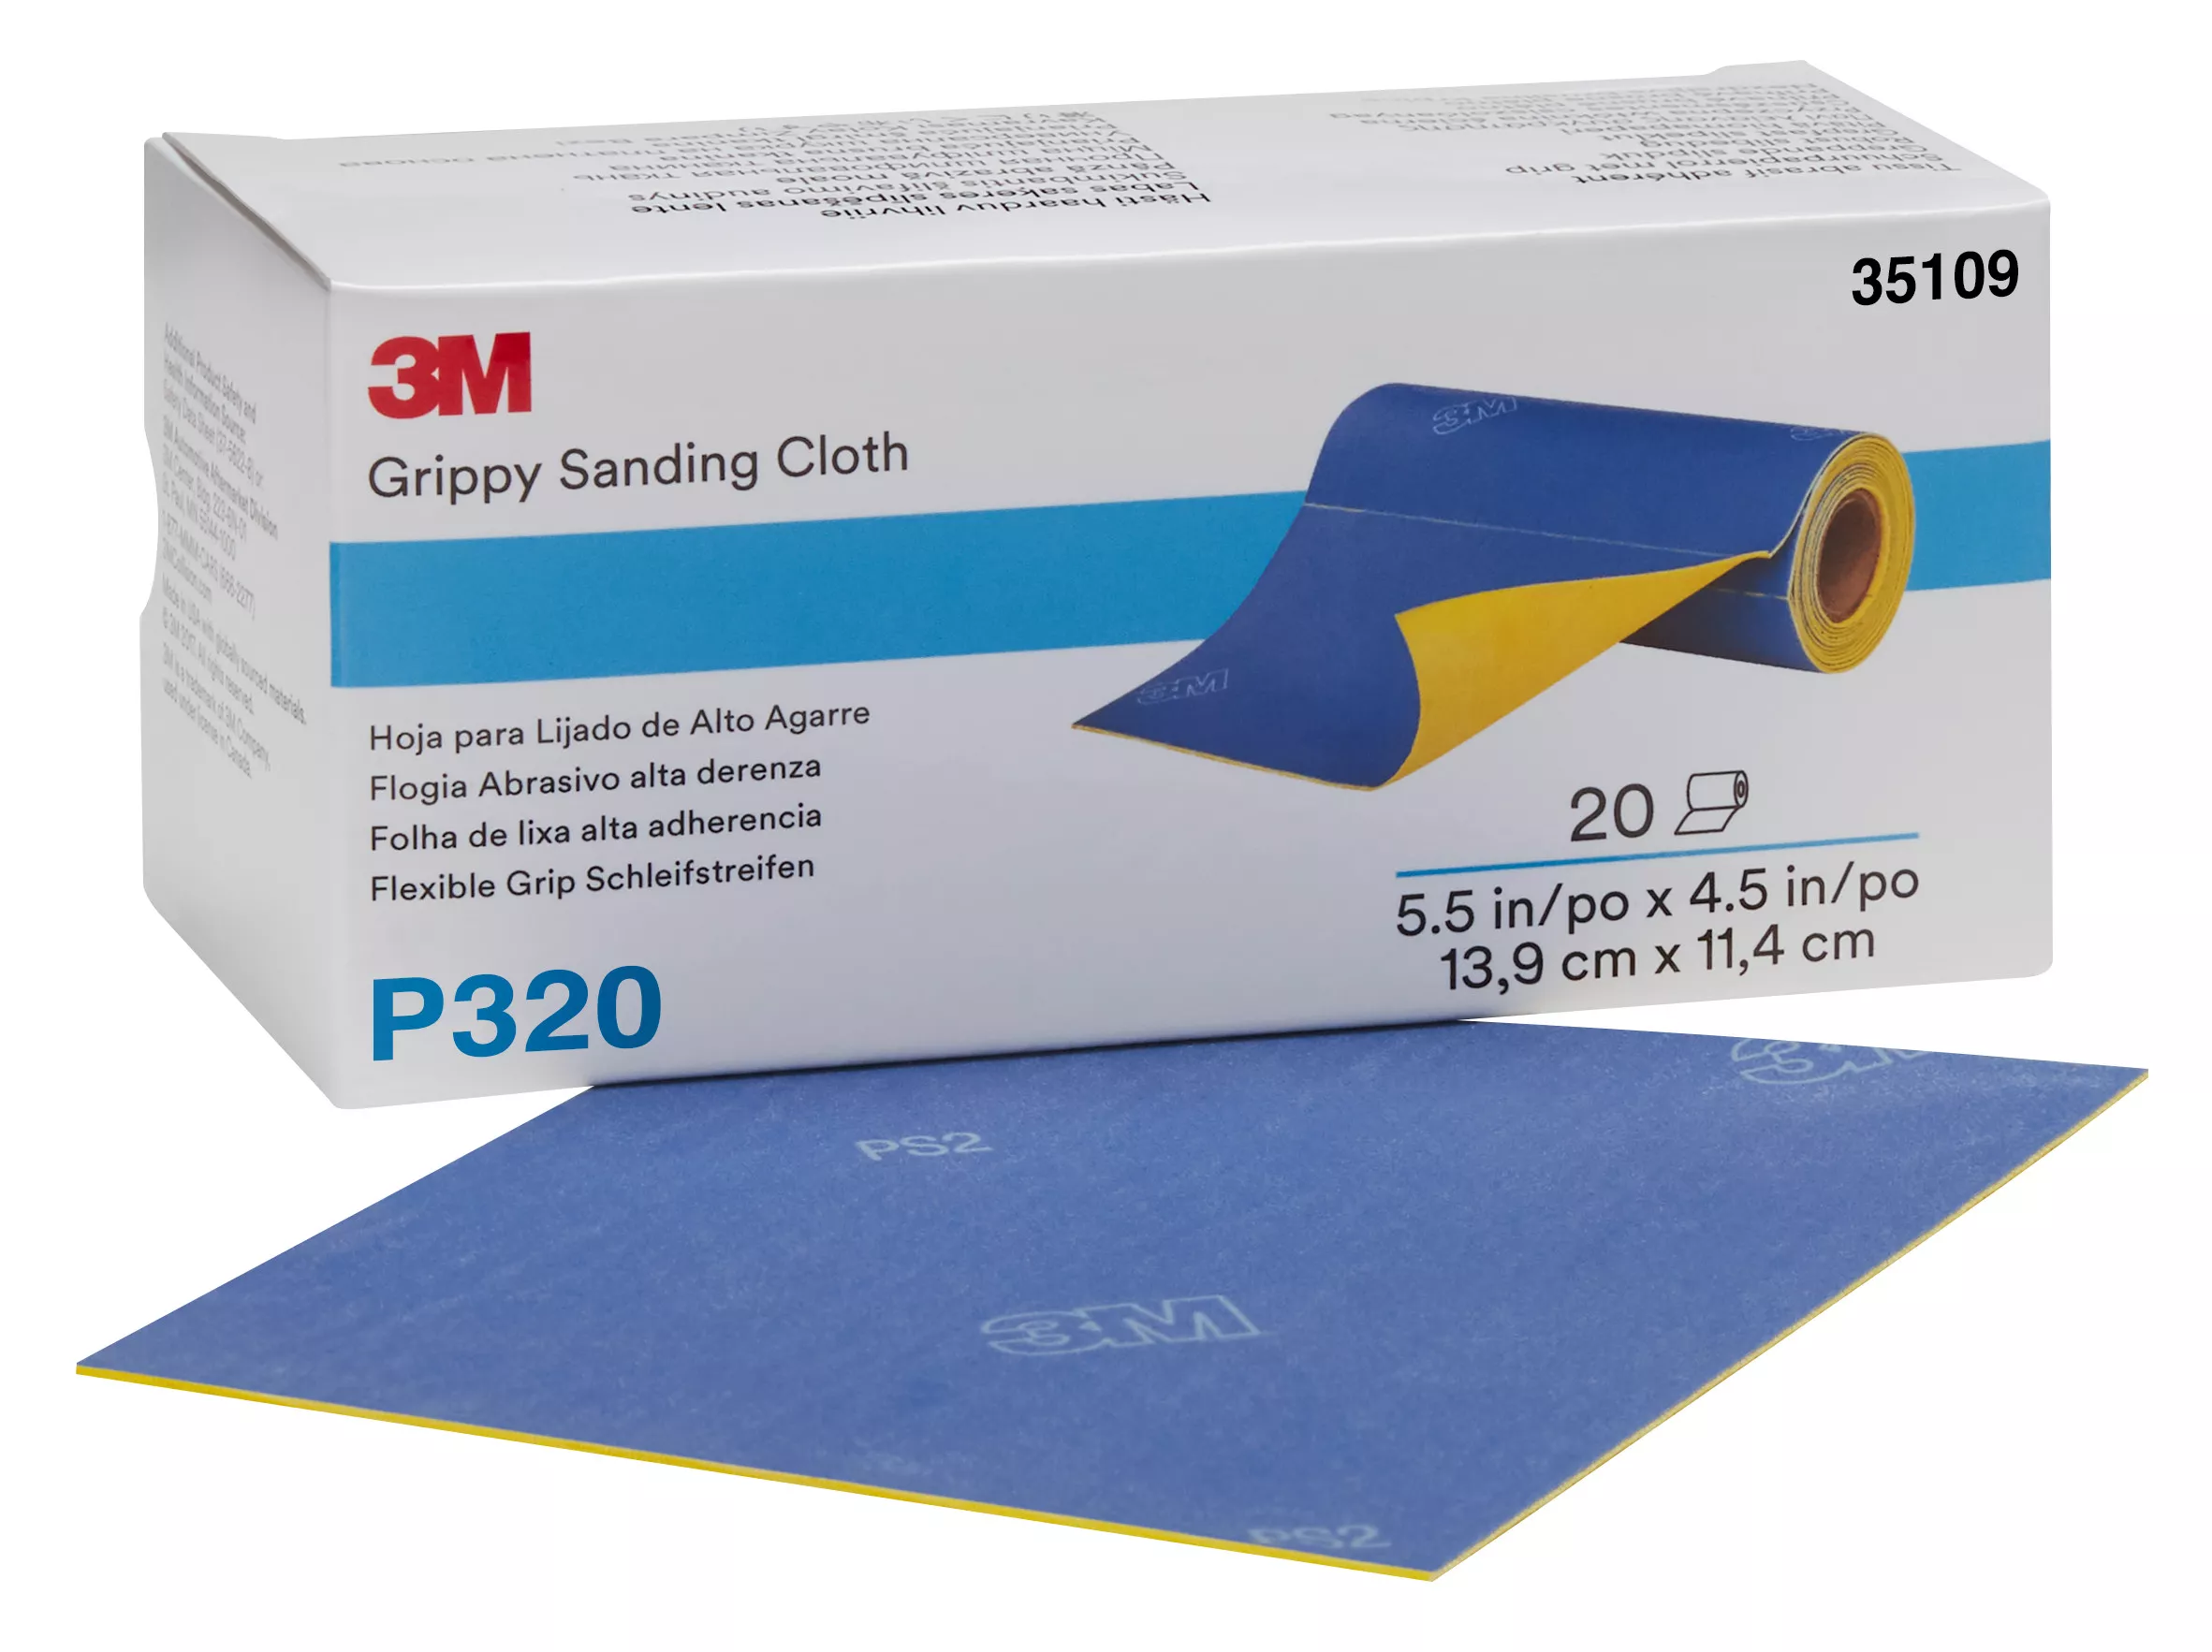 3M™ Grippy Sanding Cloth 35109, P320 Grade, 5.5 in x 4.5 in, 20
Sheets/Roll, 4 Rolls/Case